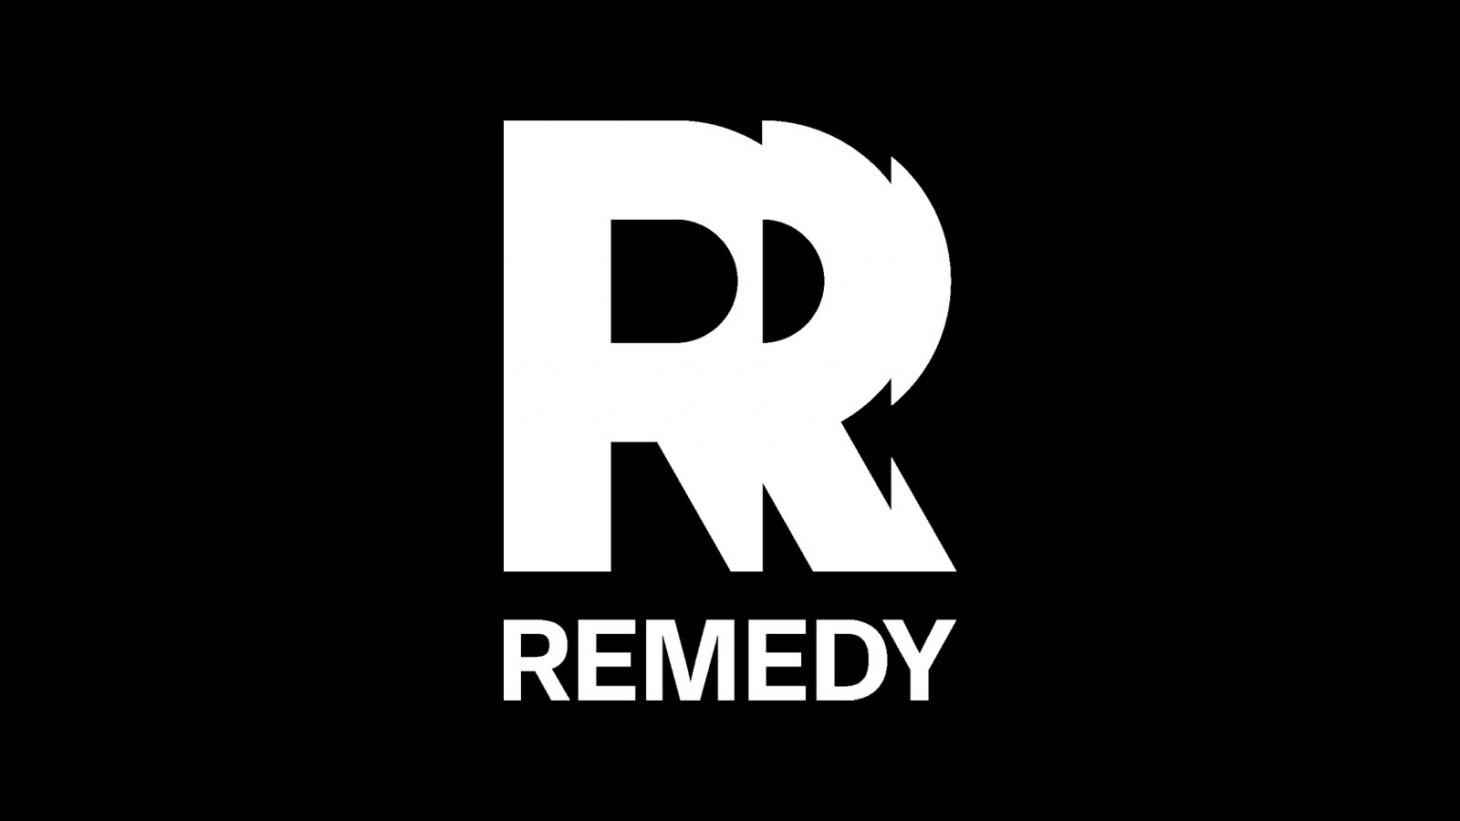 Remedy Reboots Multiplayer “Vanguard” Project; New Codename “Kestrel”